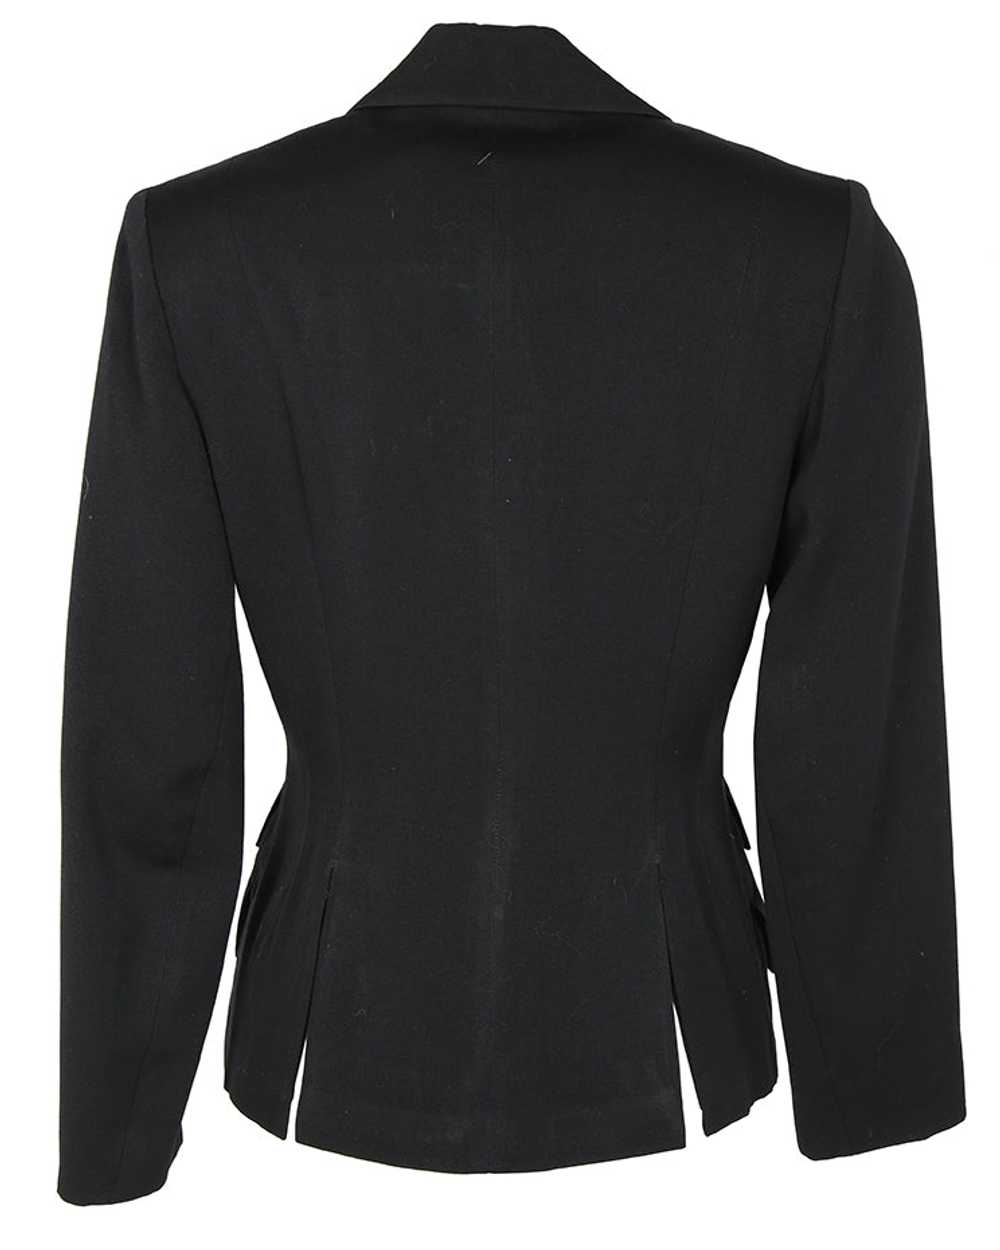 1940s Black Tailored Jacket - S - image 3